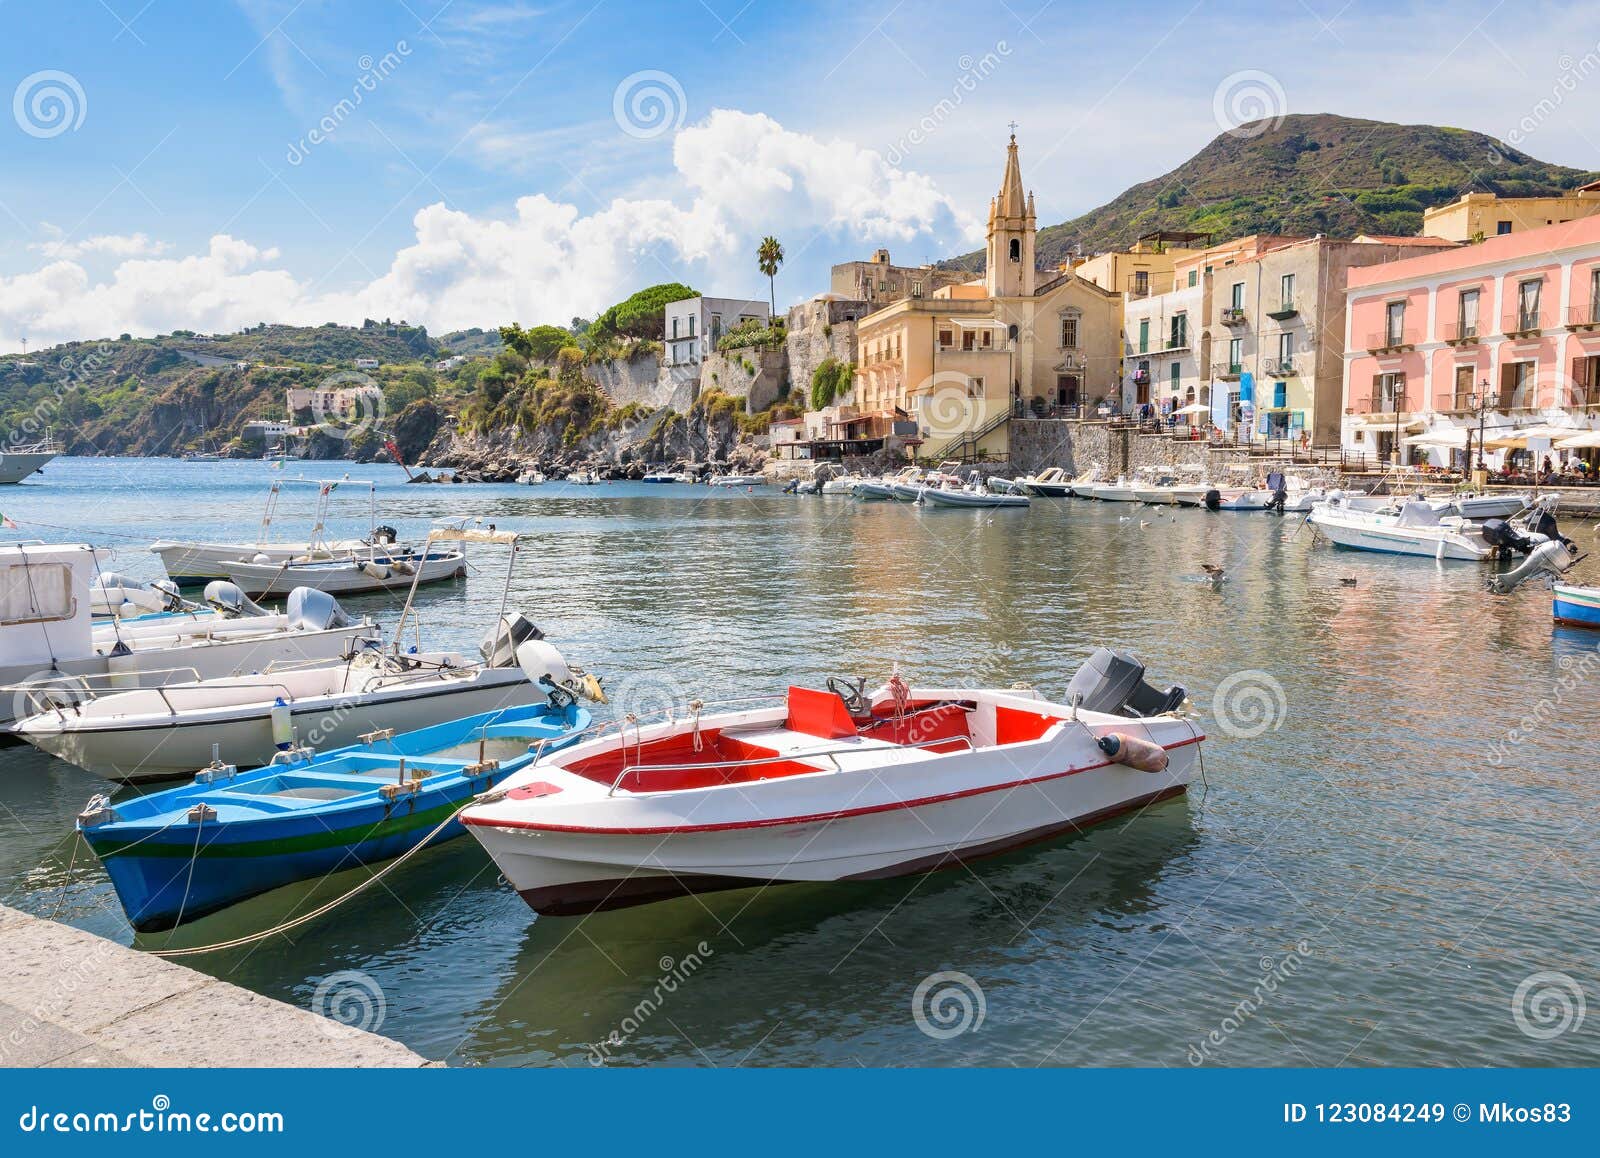 boats at marina corta in lipari town